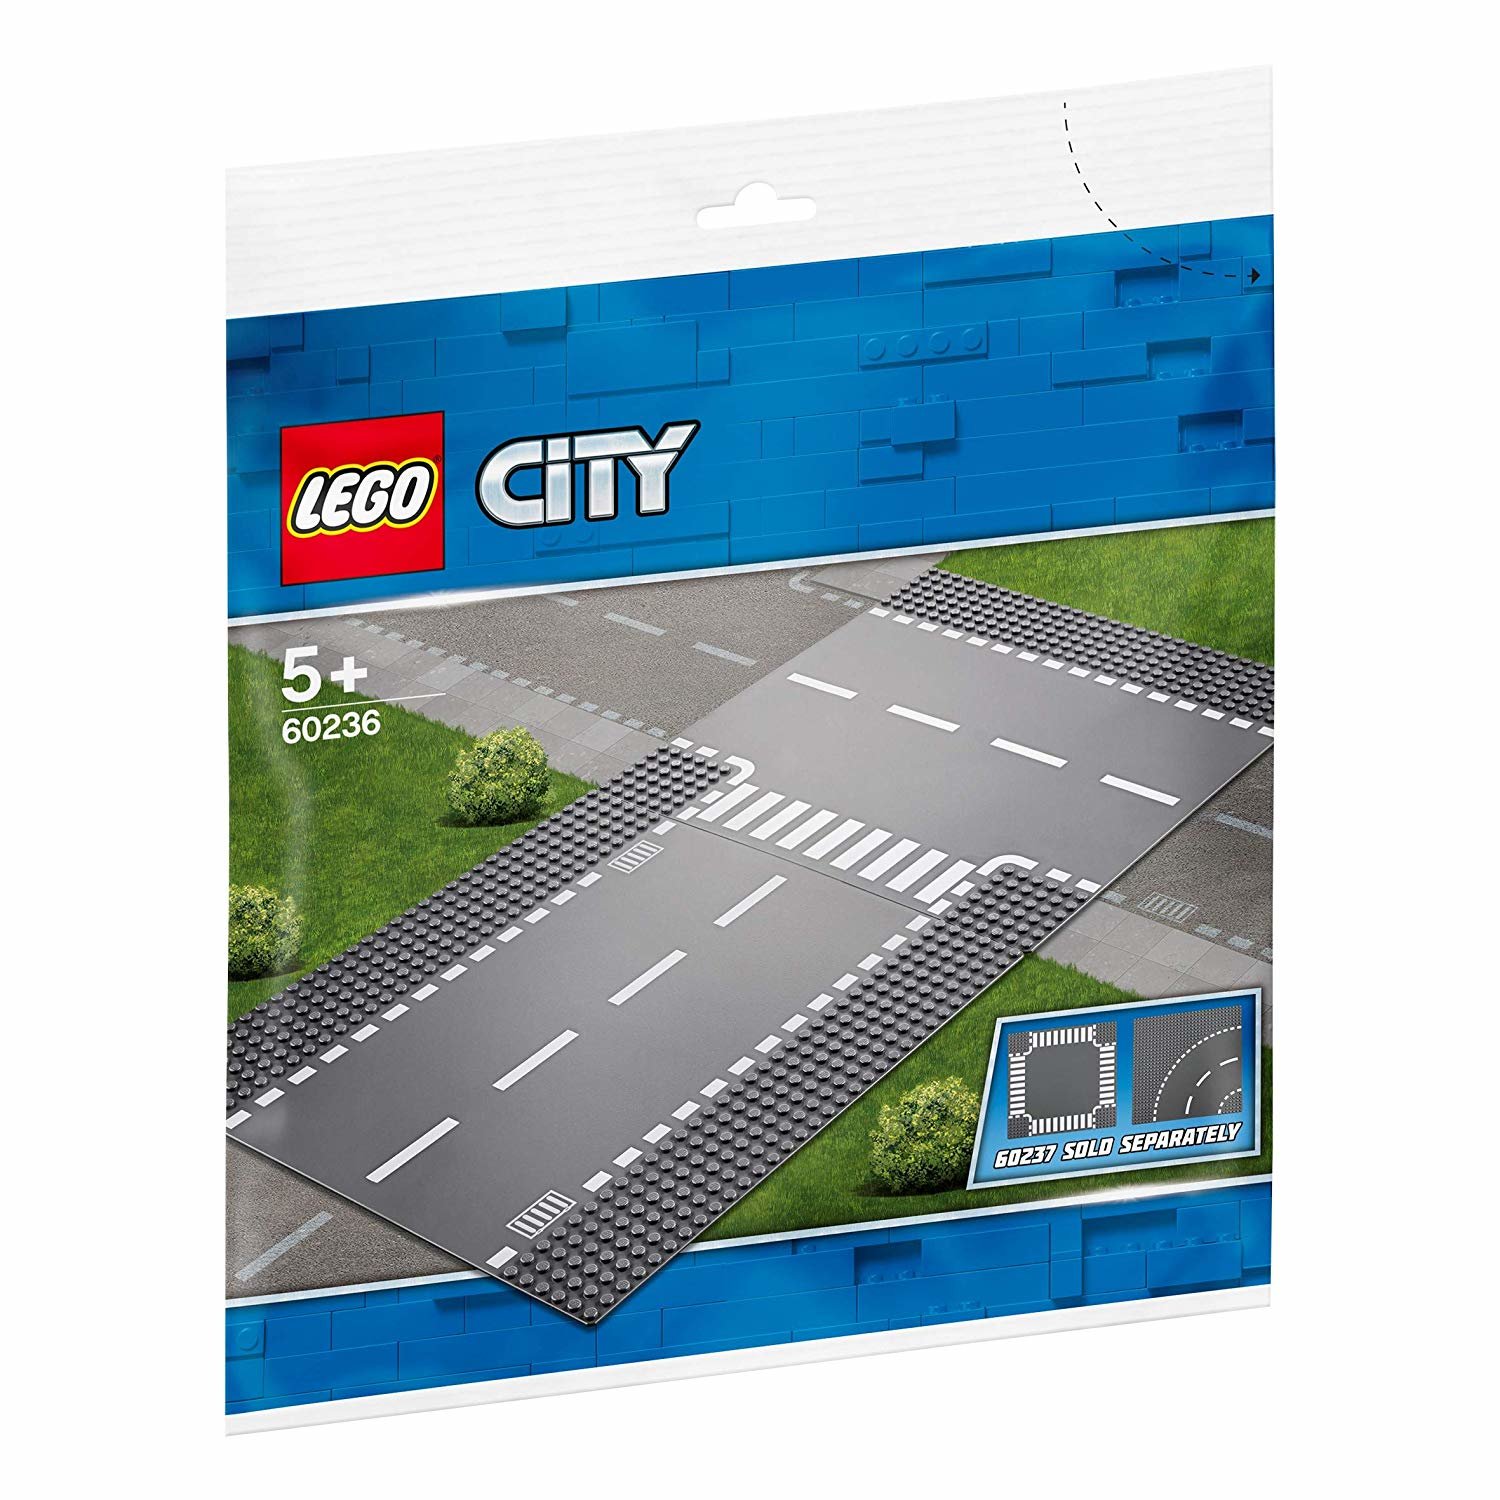 60236 LEGO® City Tiesi atkarpa ir T formos sankryža